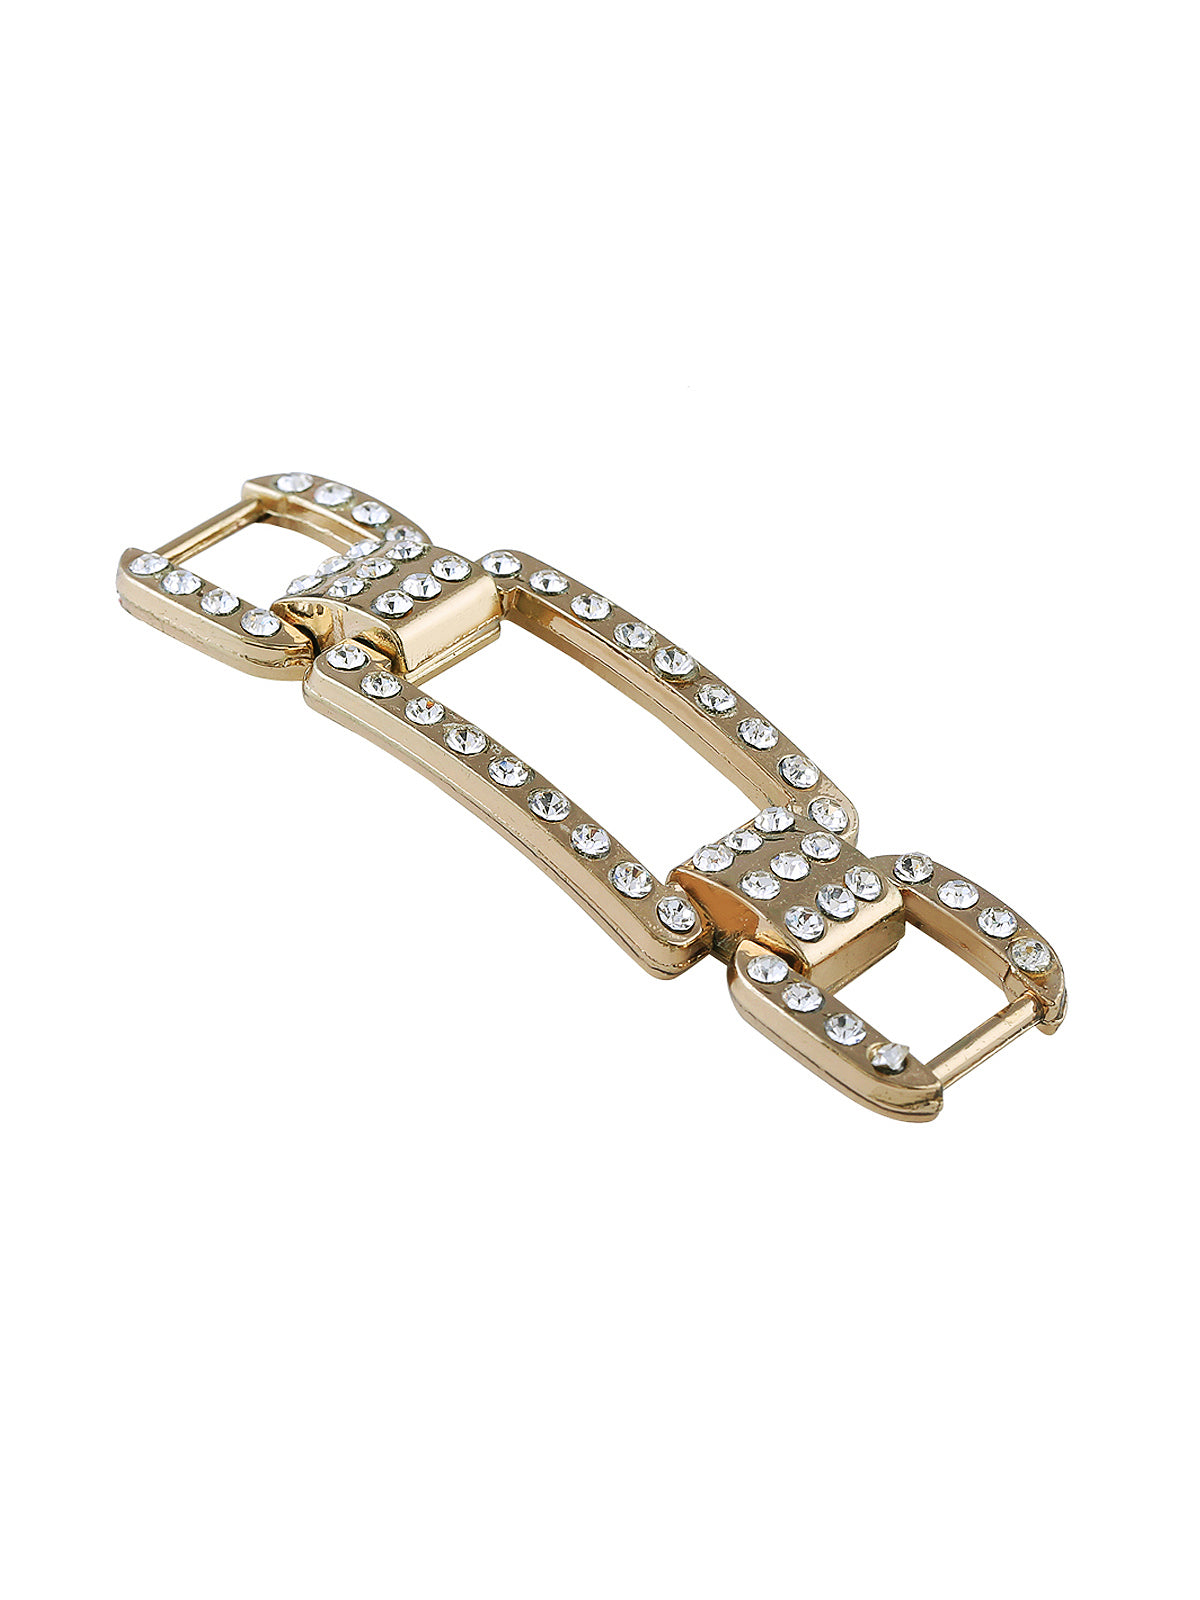 Rectangle Shape Diamond Golden Colour Decorative Belt Buckle